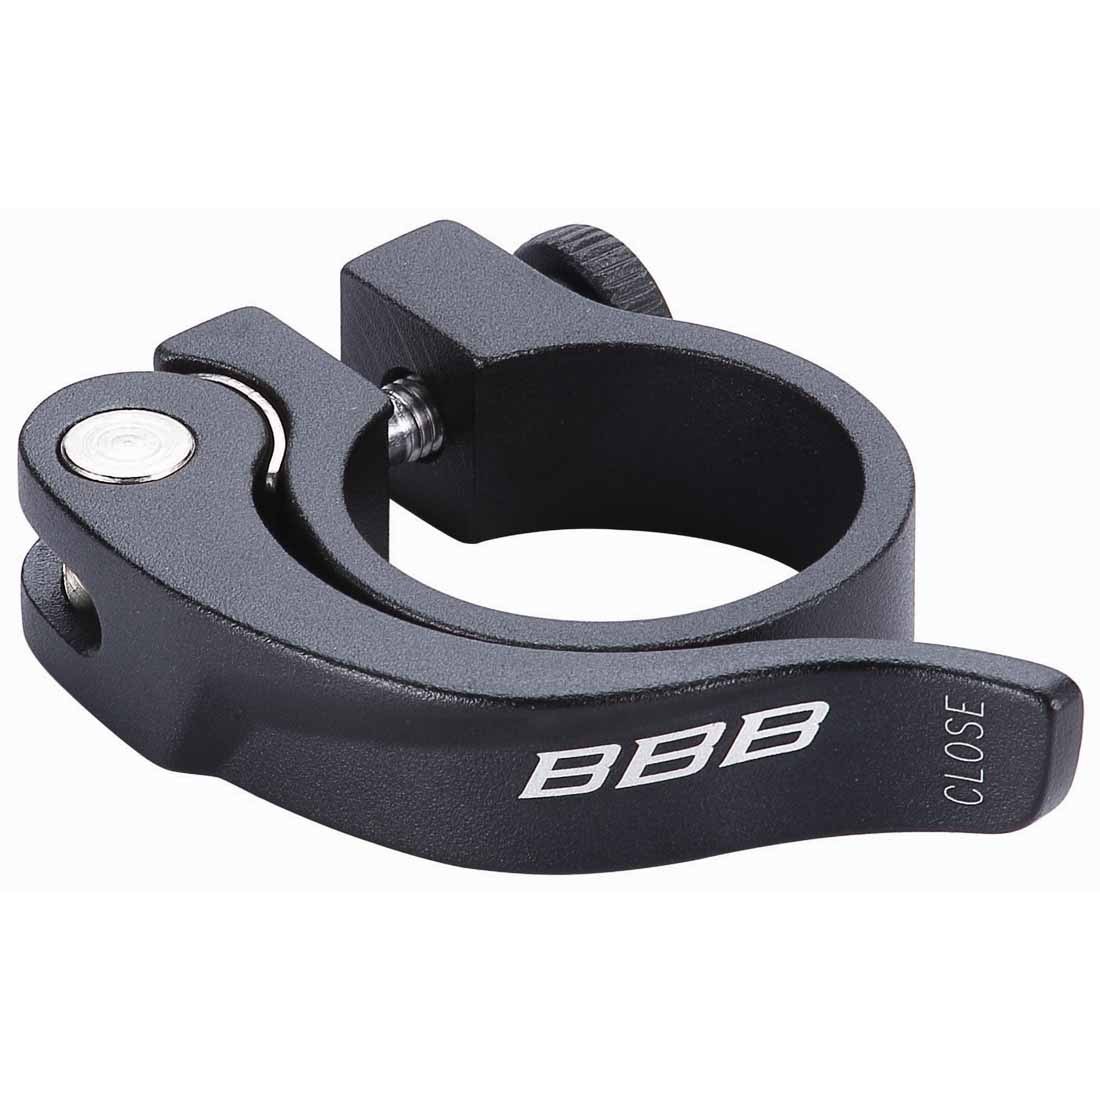 Productfoto van BBB Cycling SmoothLever BSP-87 Seatclamp - black